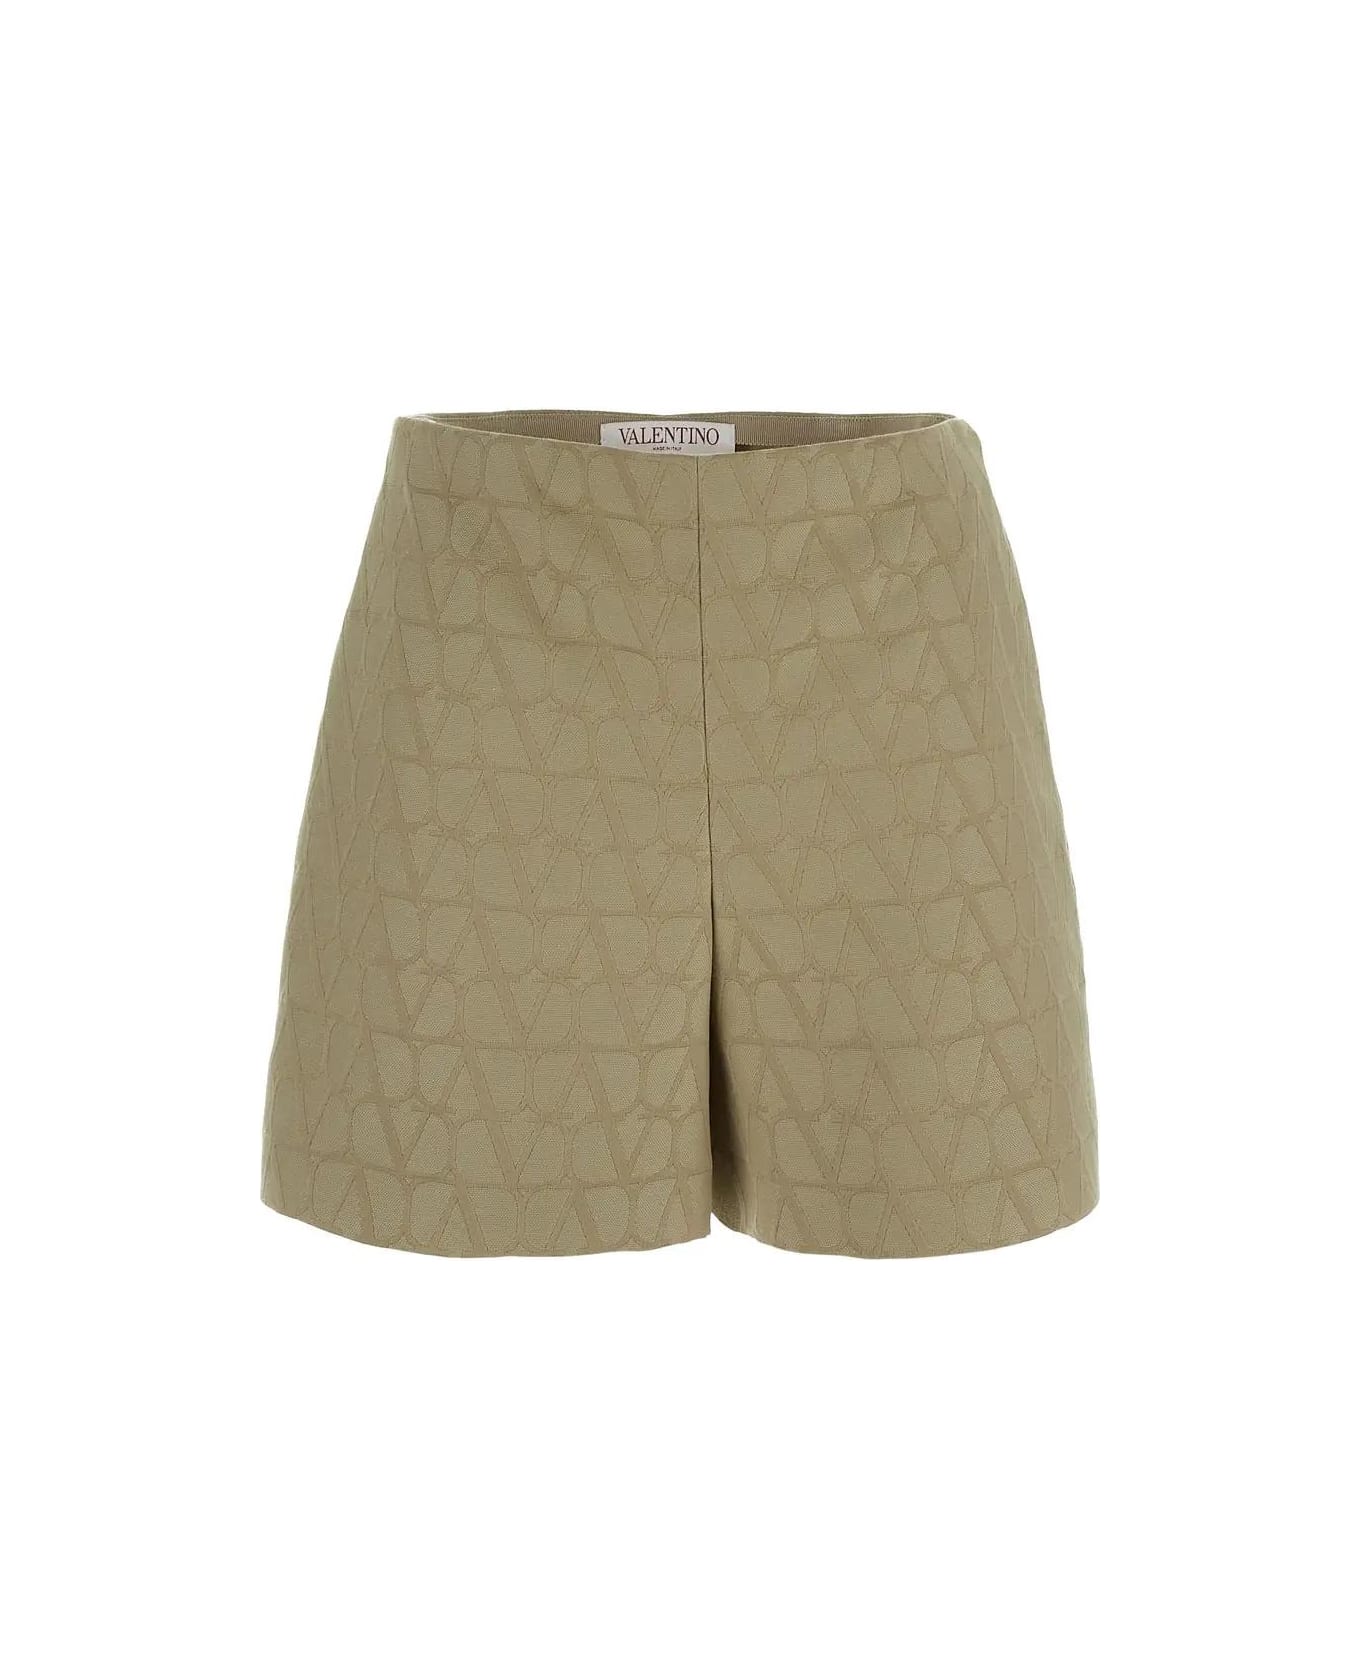 Valentino Logoed Shorts - Beige